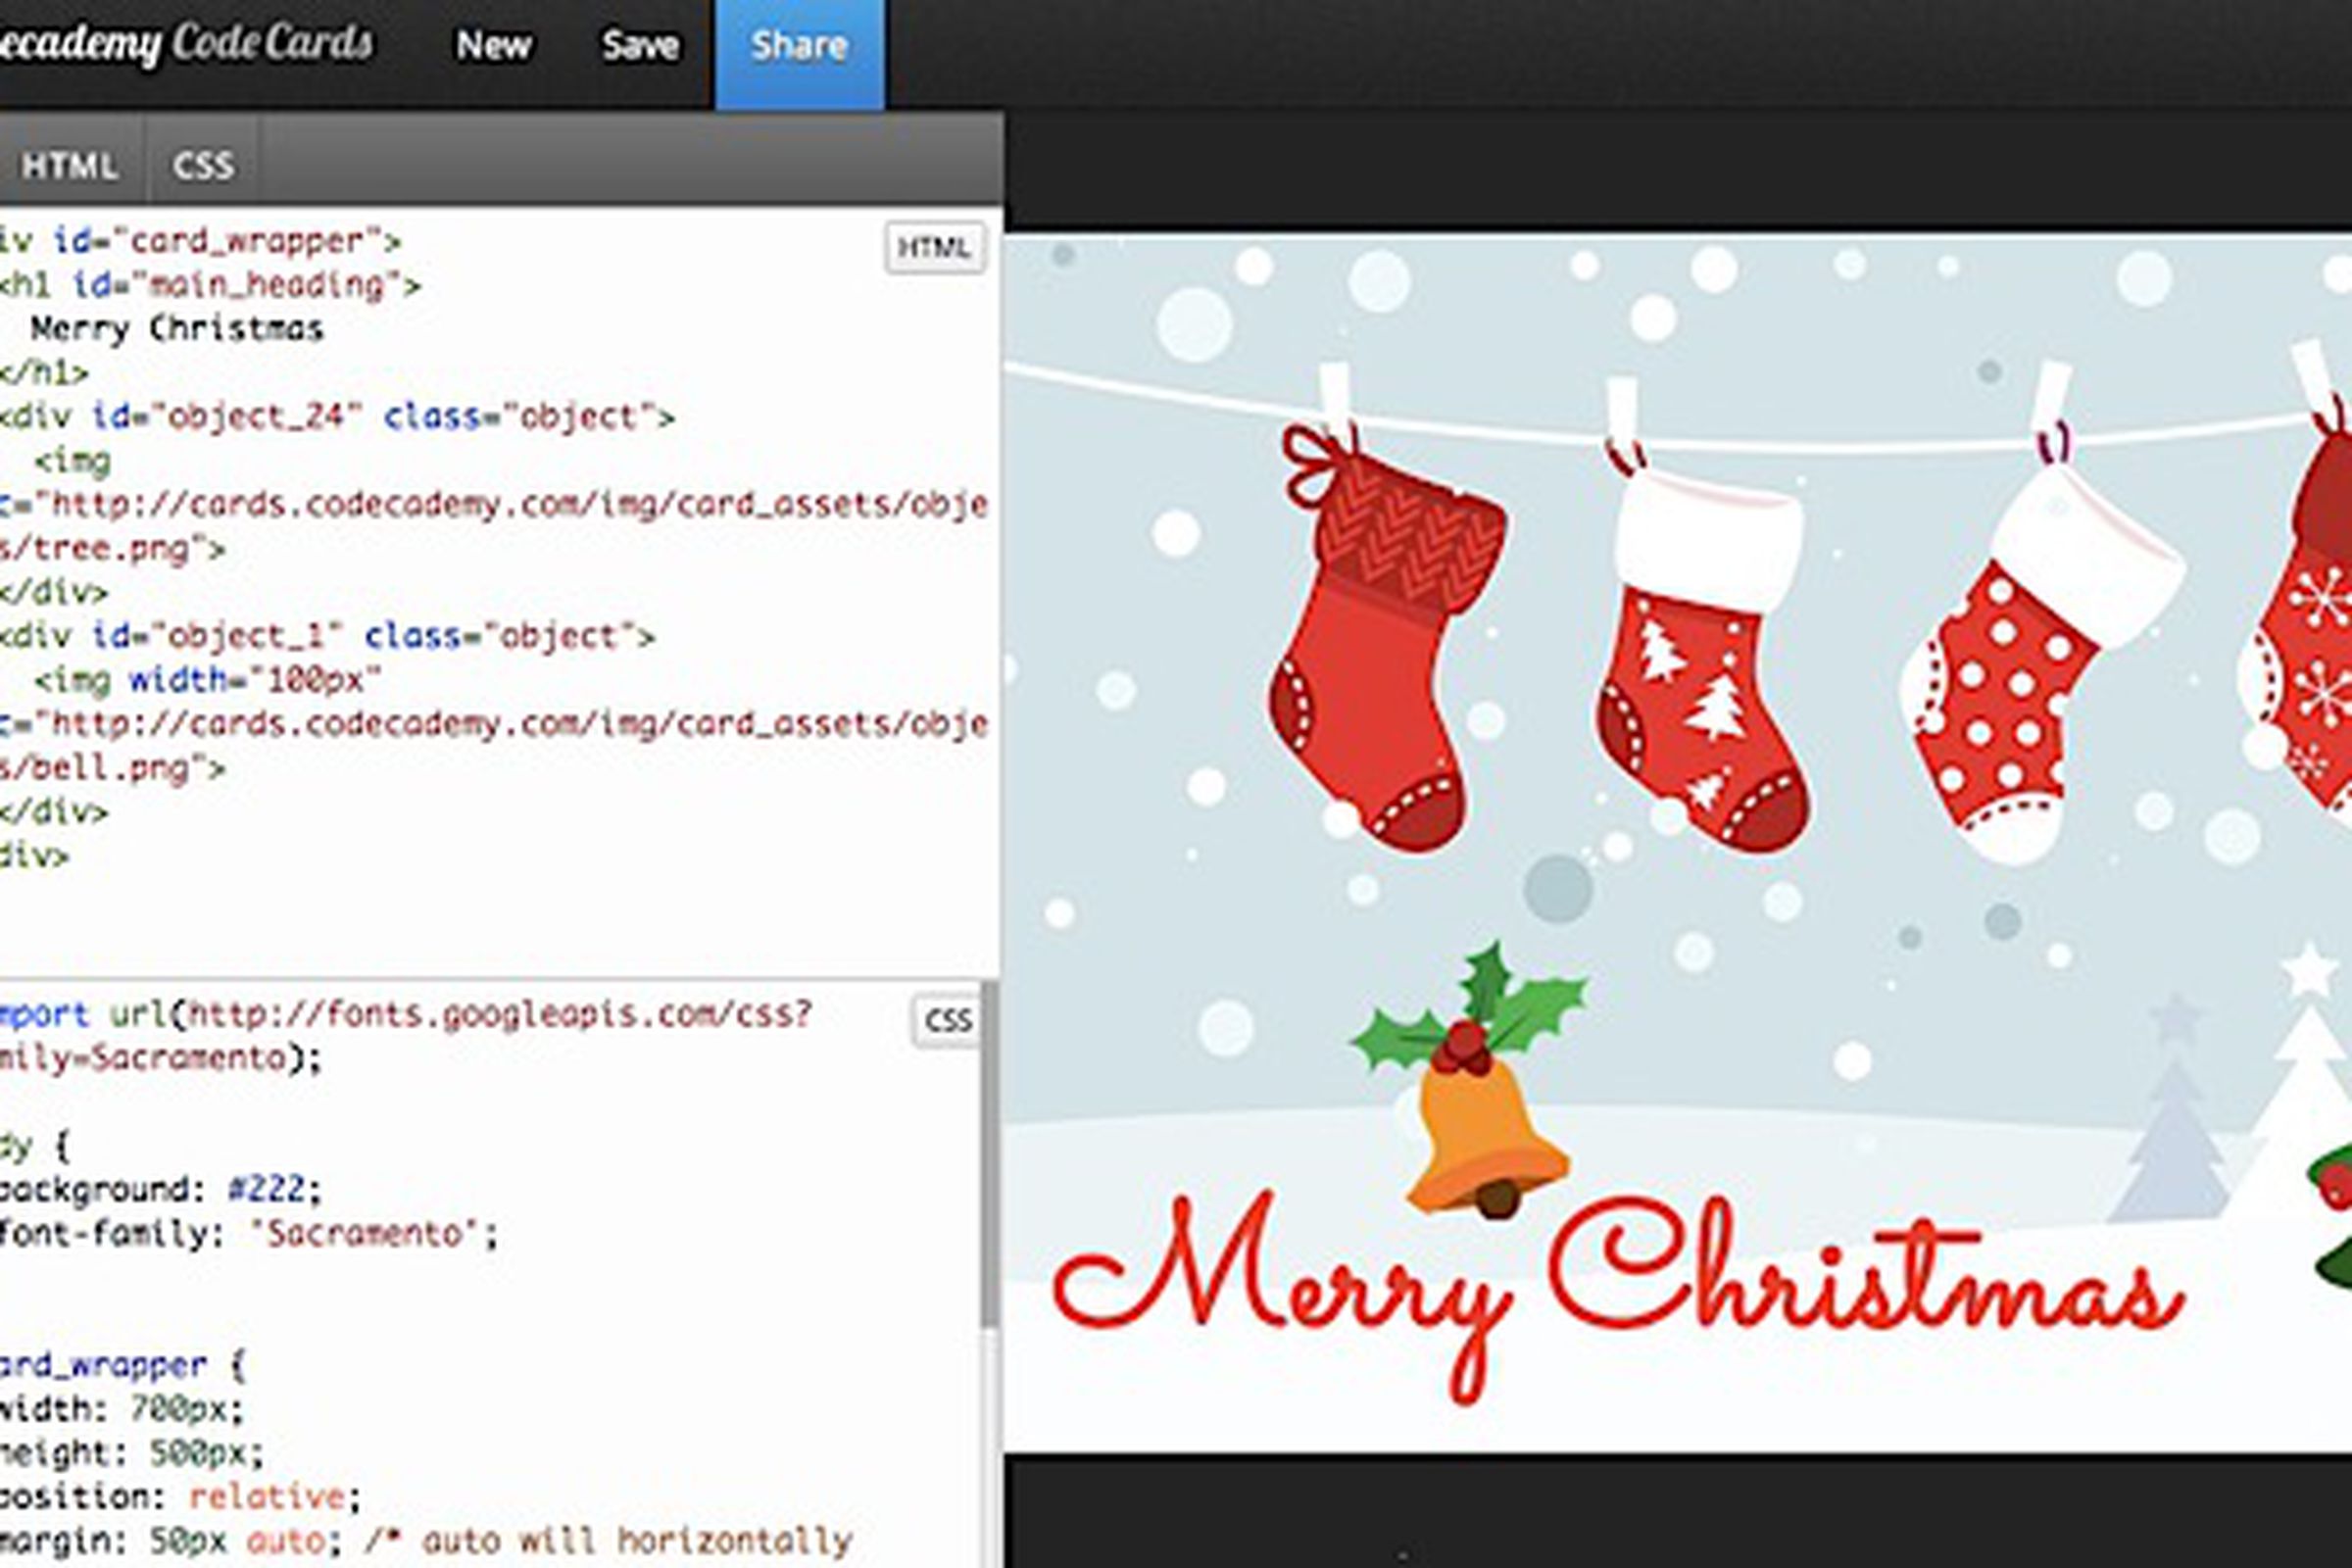 codecademy holiday card screenshot